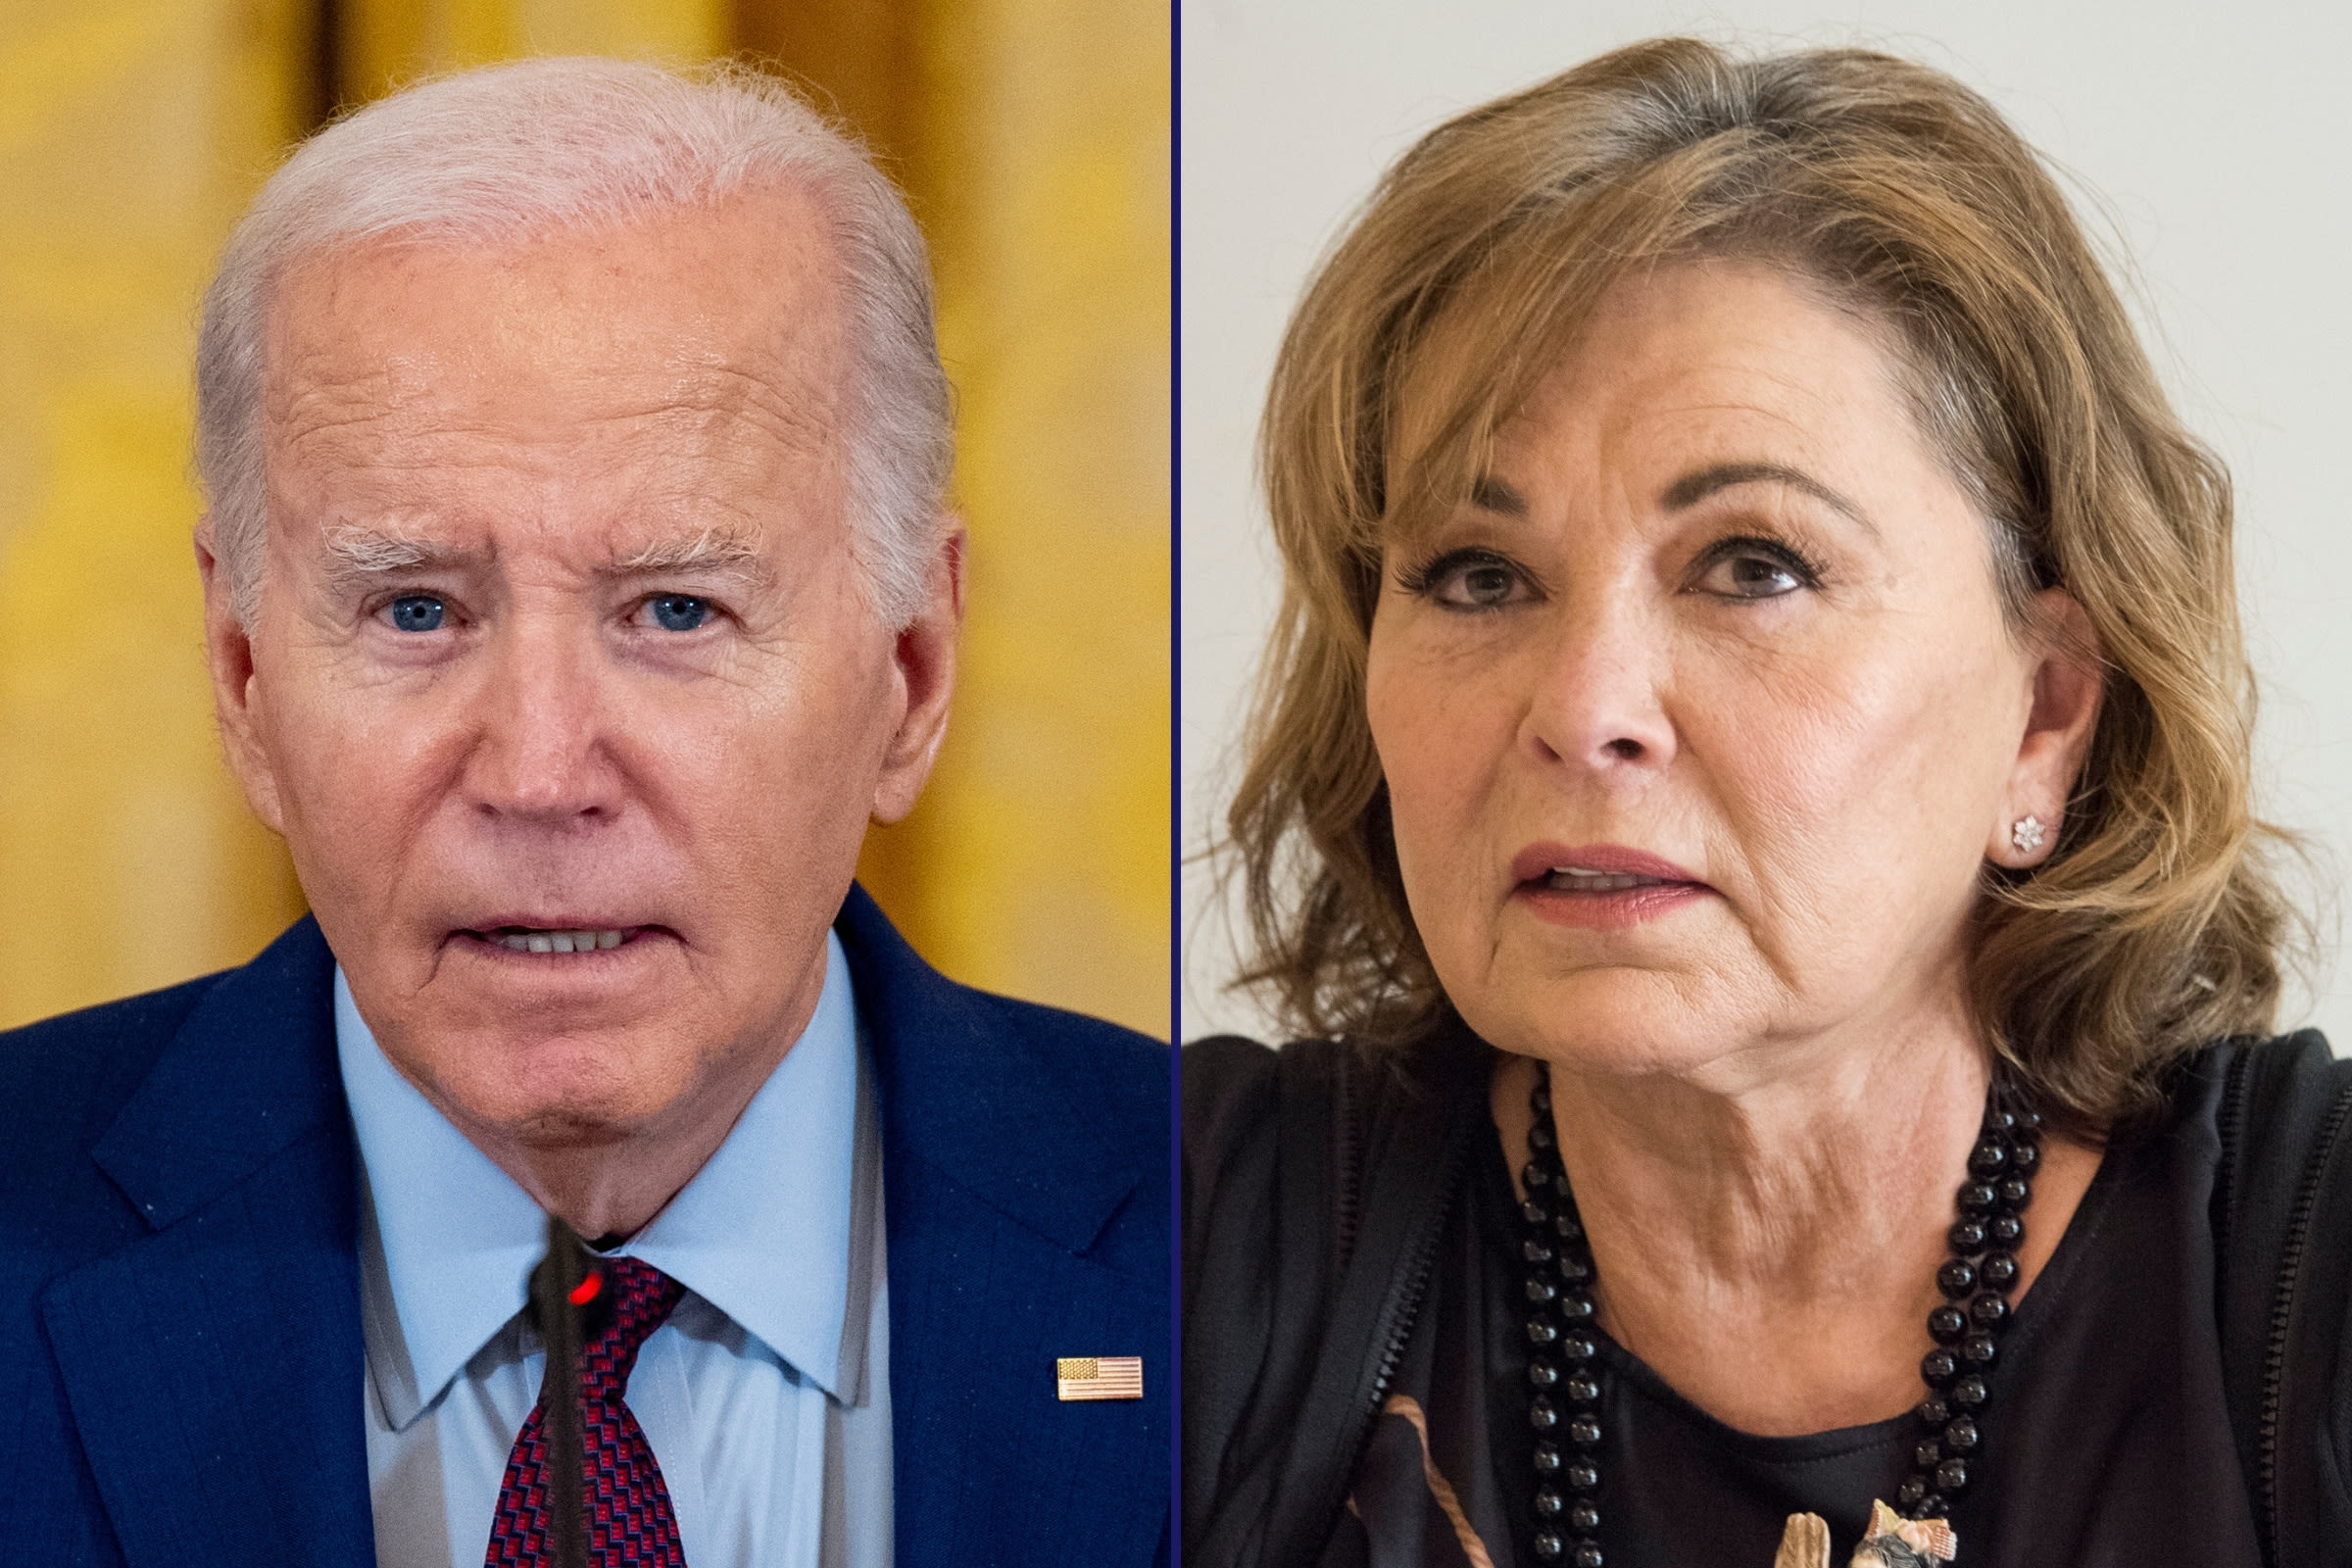 Roseanne Barr's Joe Biden remarks spark fury